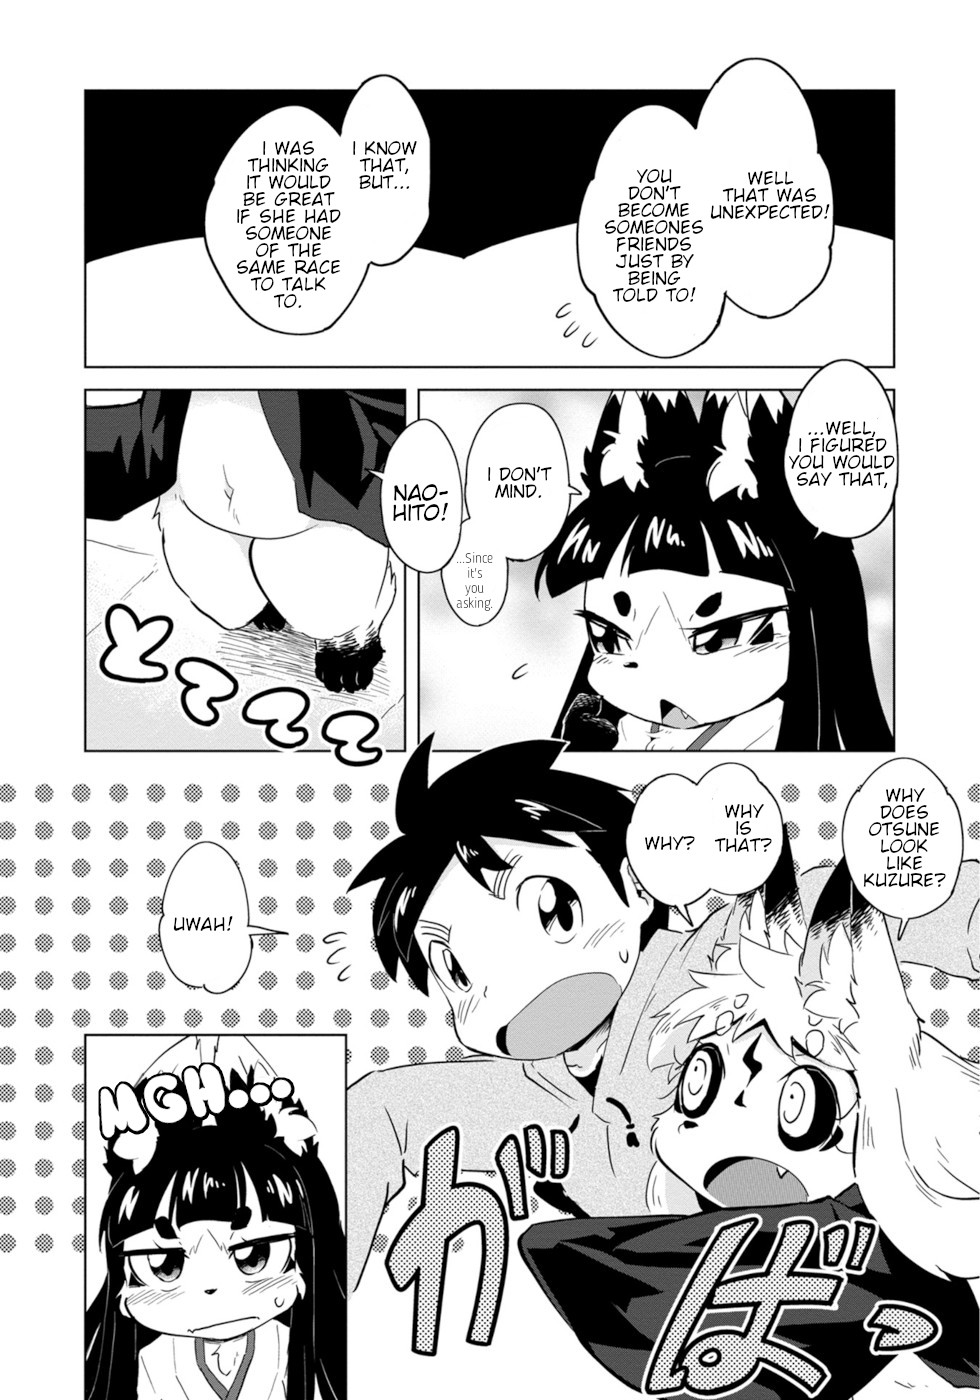 Wazawai kitsune no Kuzure-chan 5 Disaster Fox And Guardian Kitsune